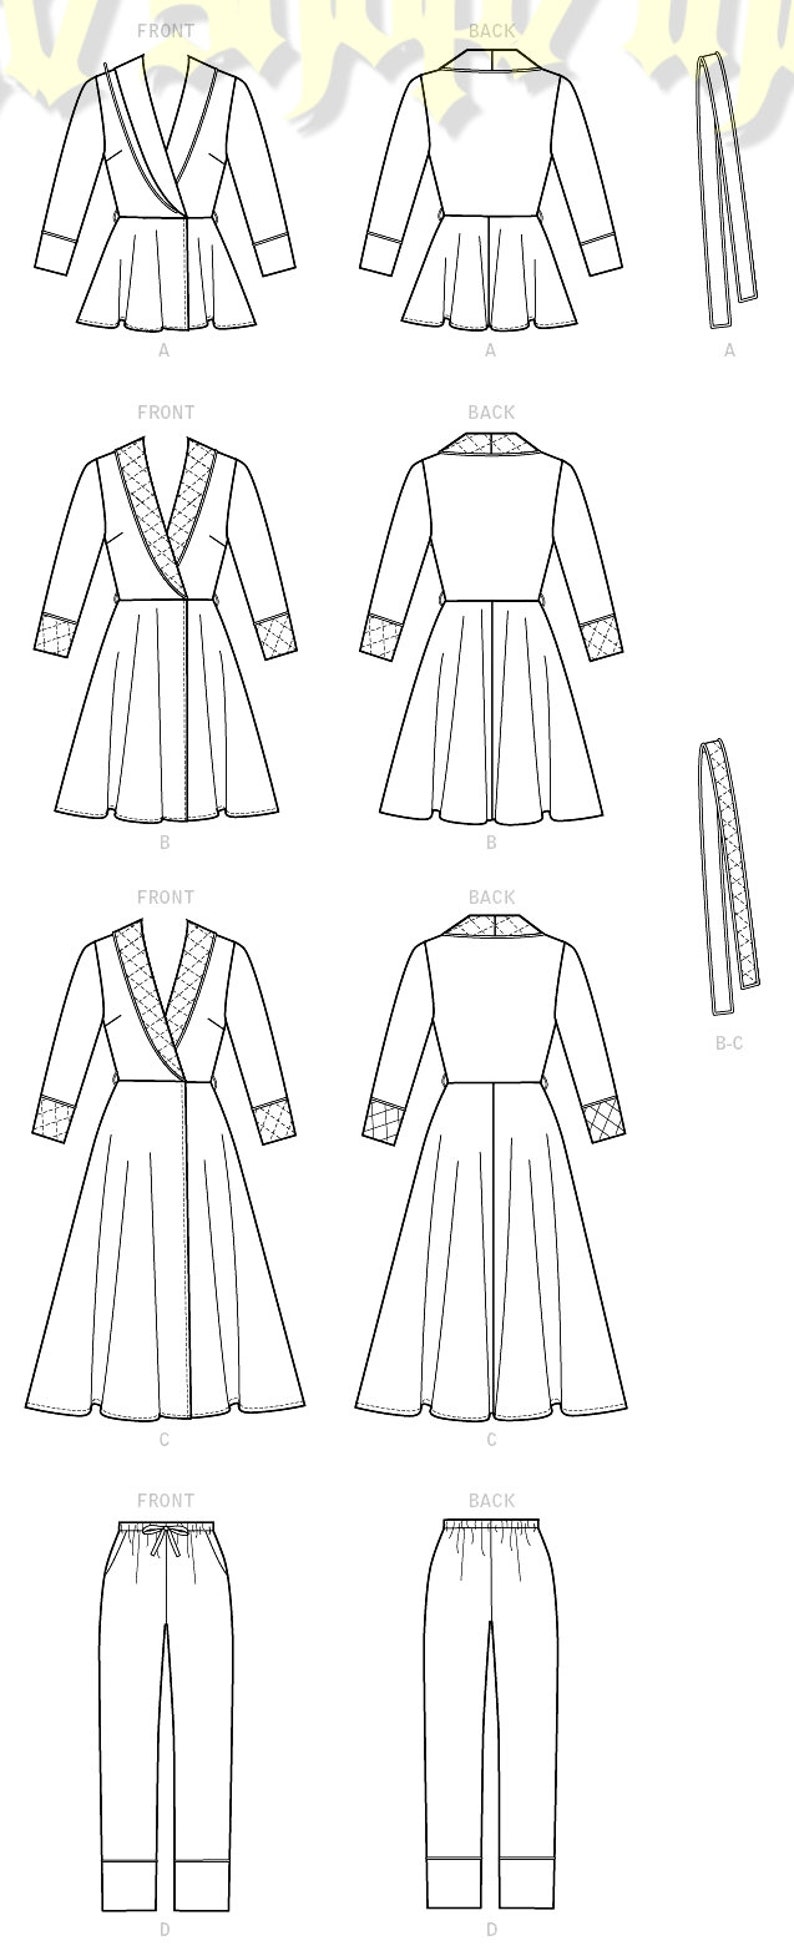 McCalls 7875 Sewing Pattern Pajamas Robe Sleepwear Nightie | Etsy